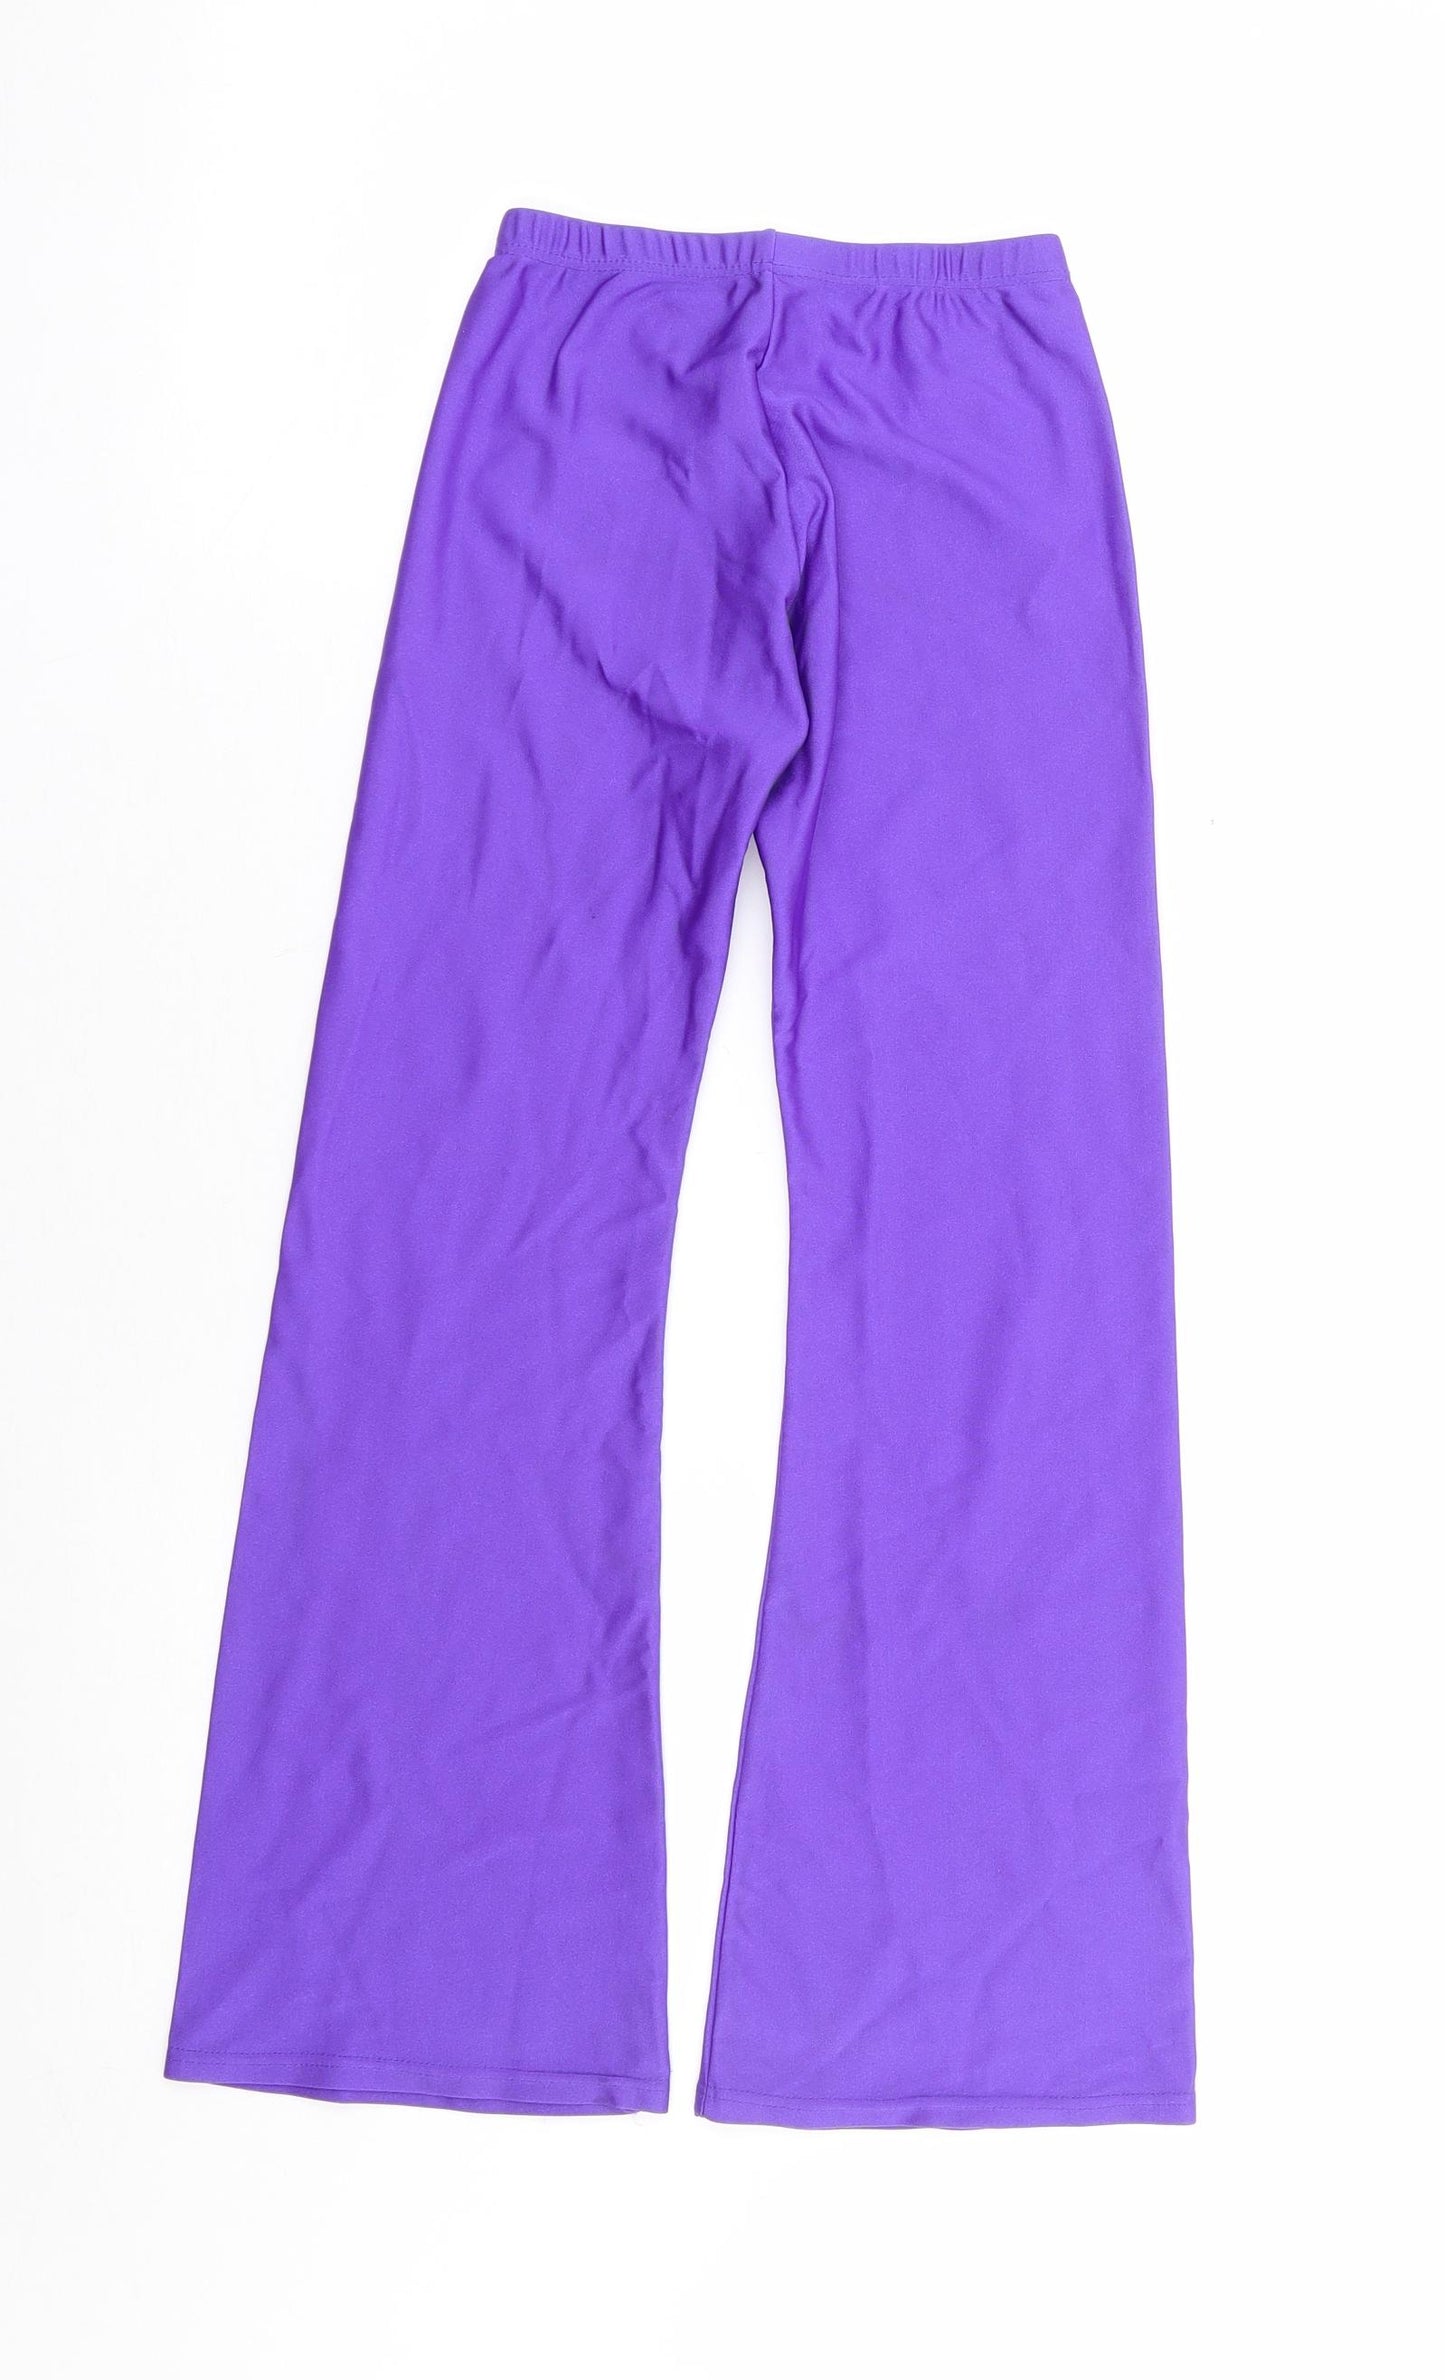 Roch Valley Girls Purple Polyamide Sweatpants Trousers Size 7-8 Years Regular Pullover - Dancewear